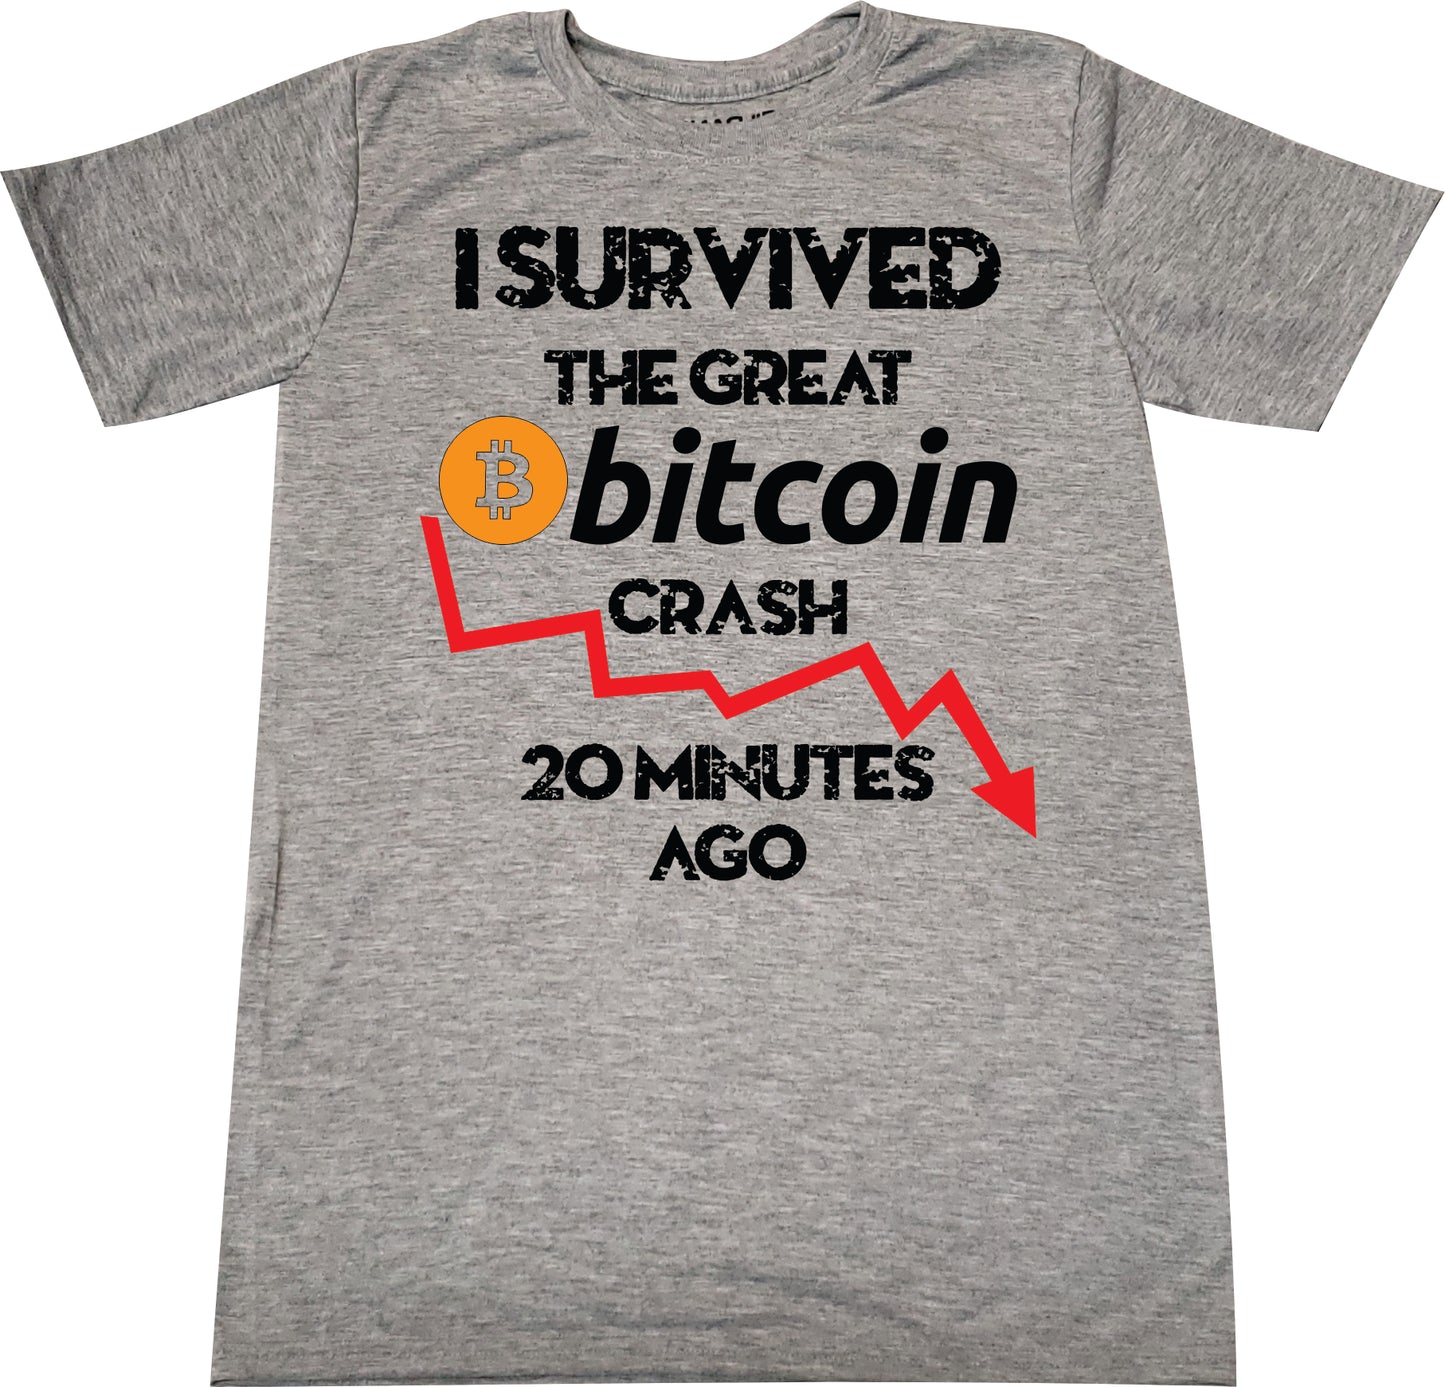 I survived Bitcoin Crash tshirt